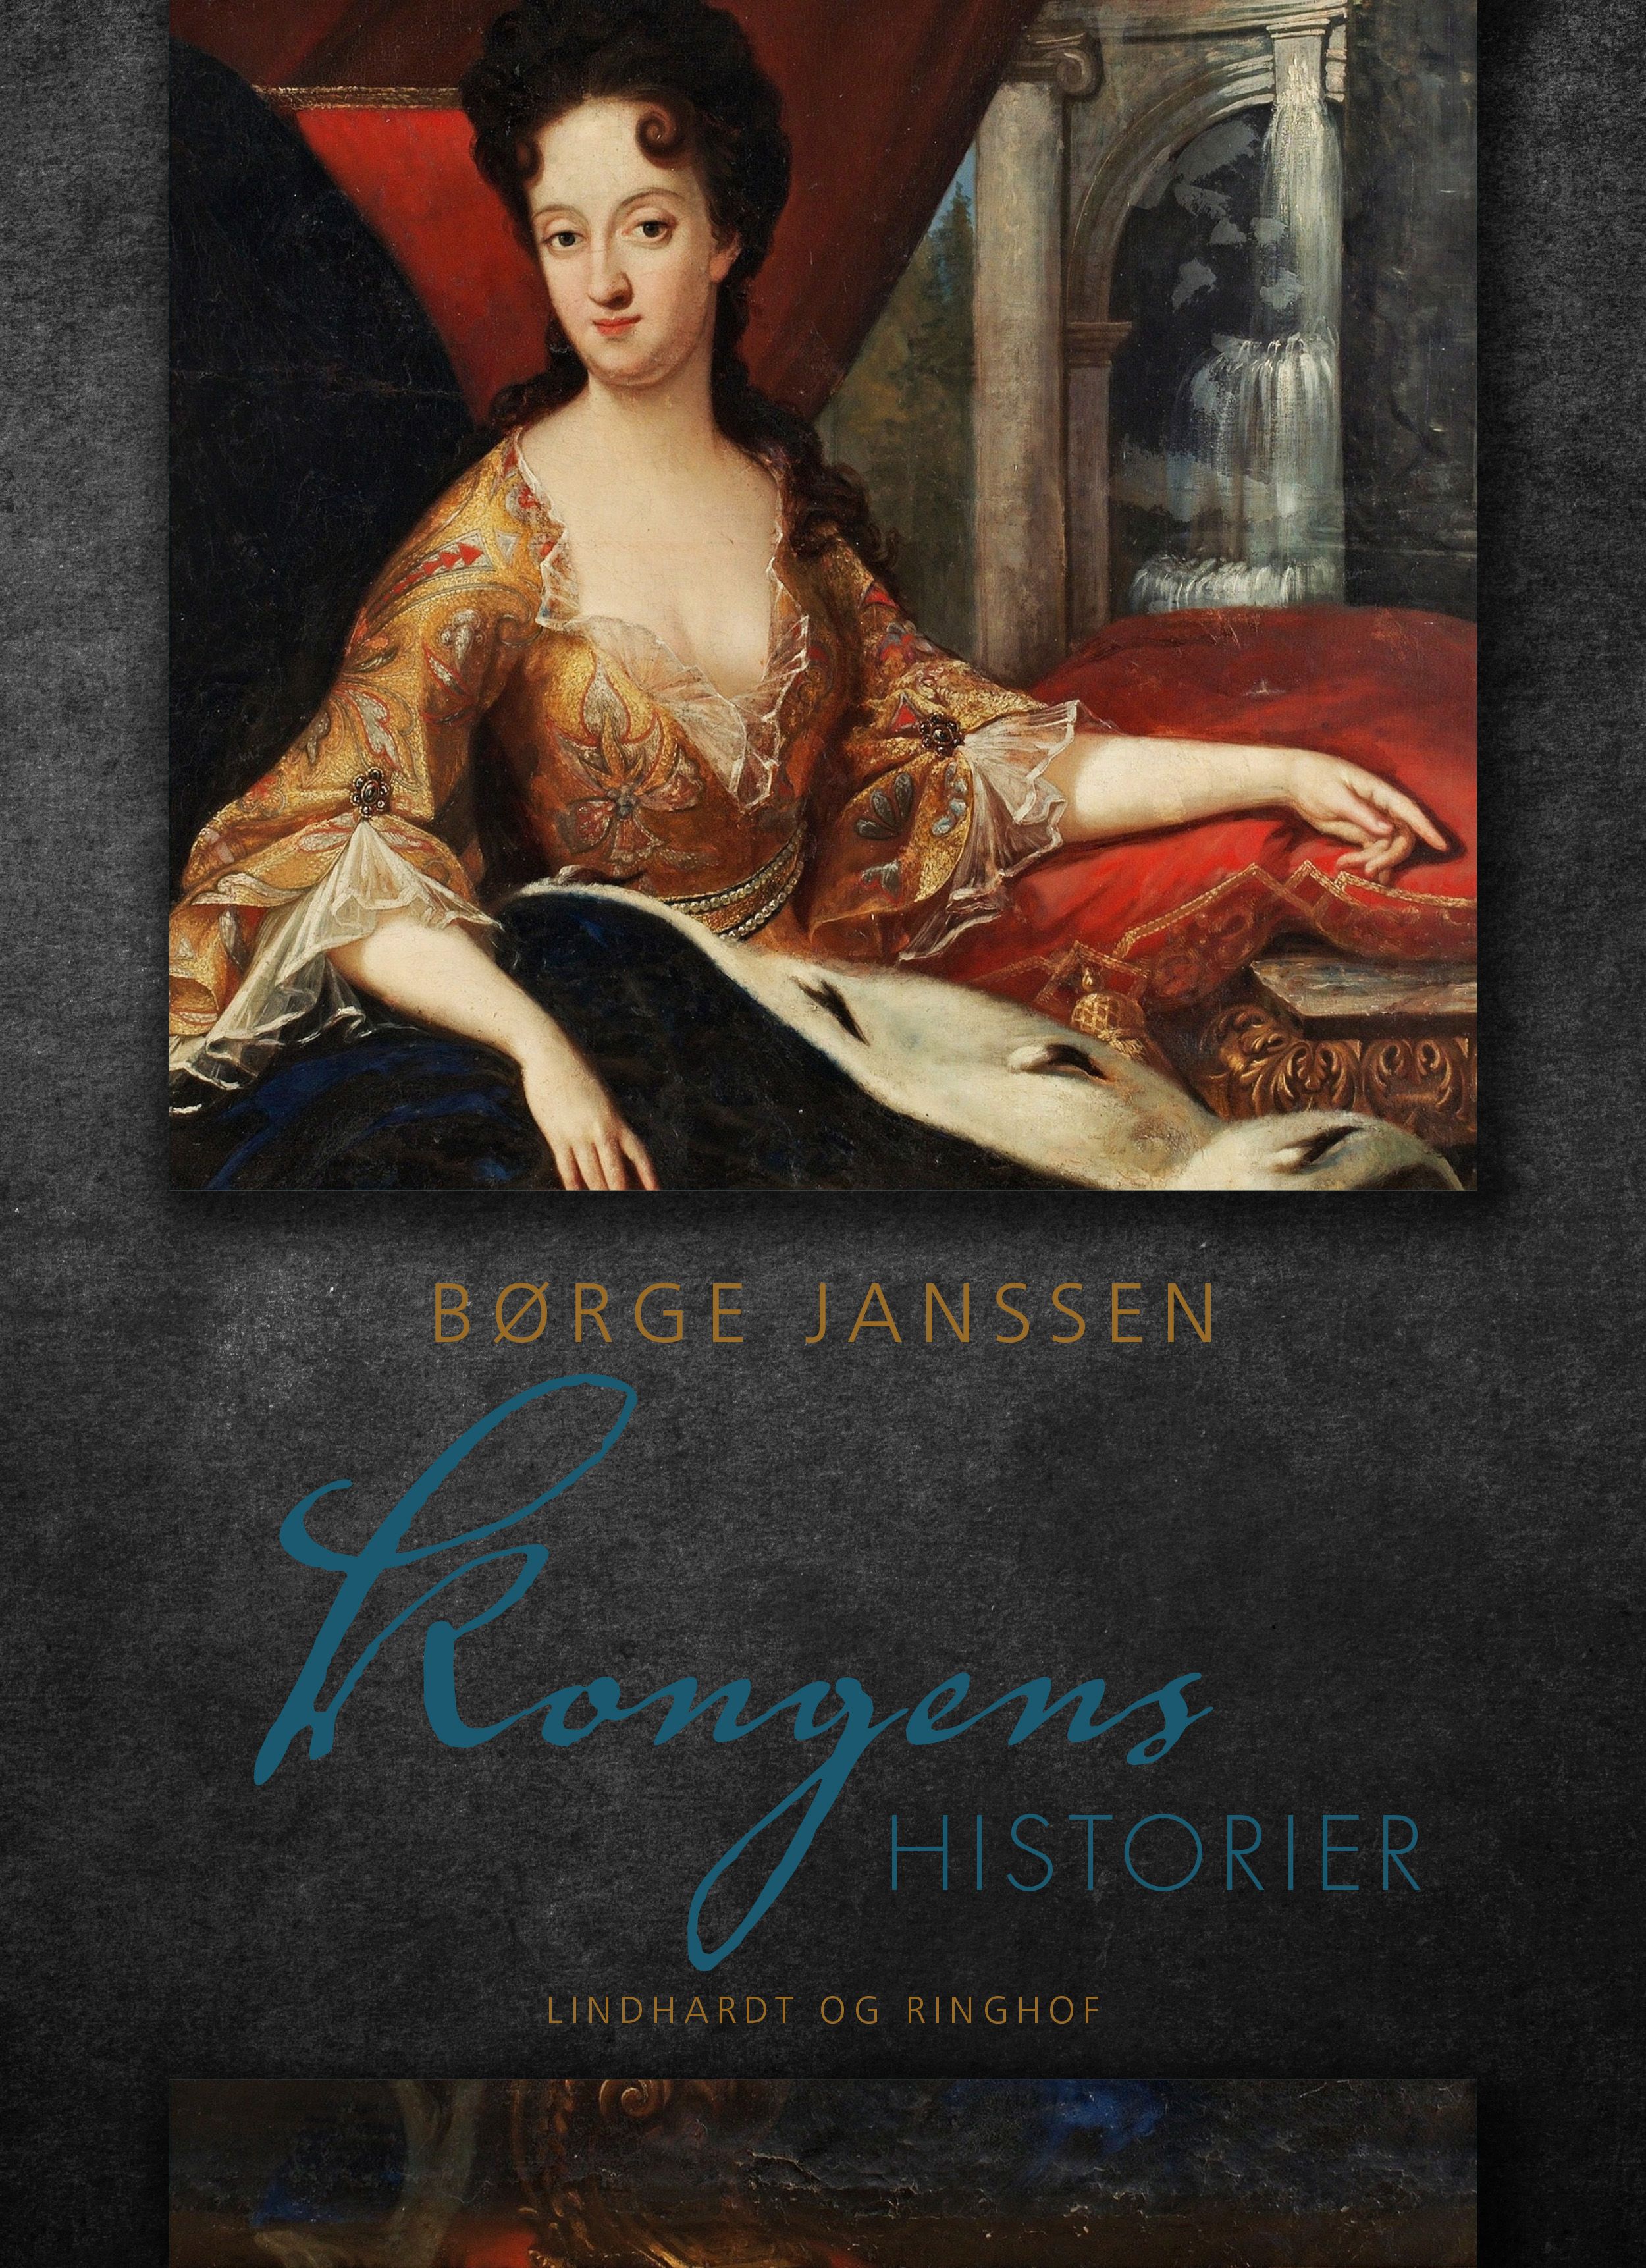 Kongens historier, eBook by Børge Janssen